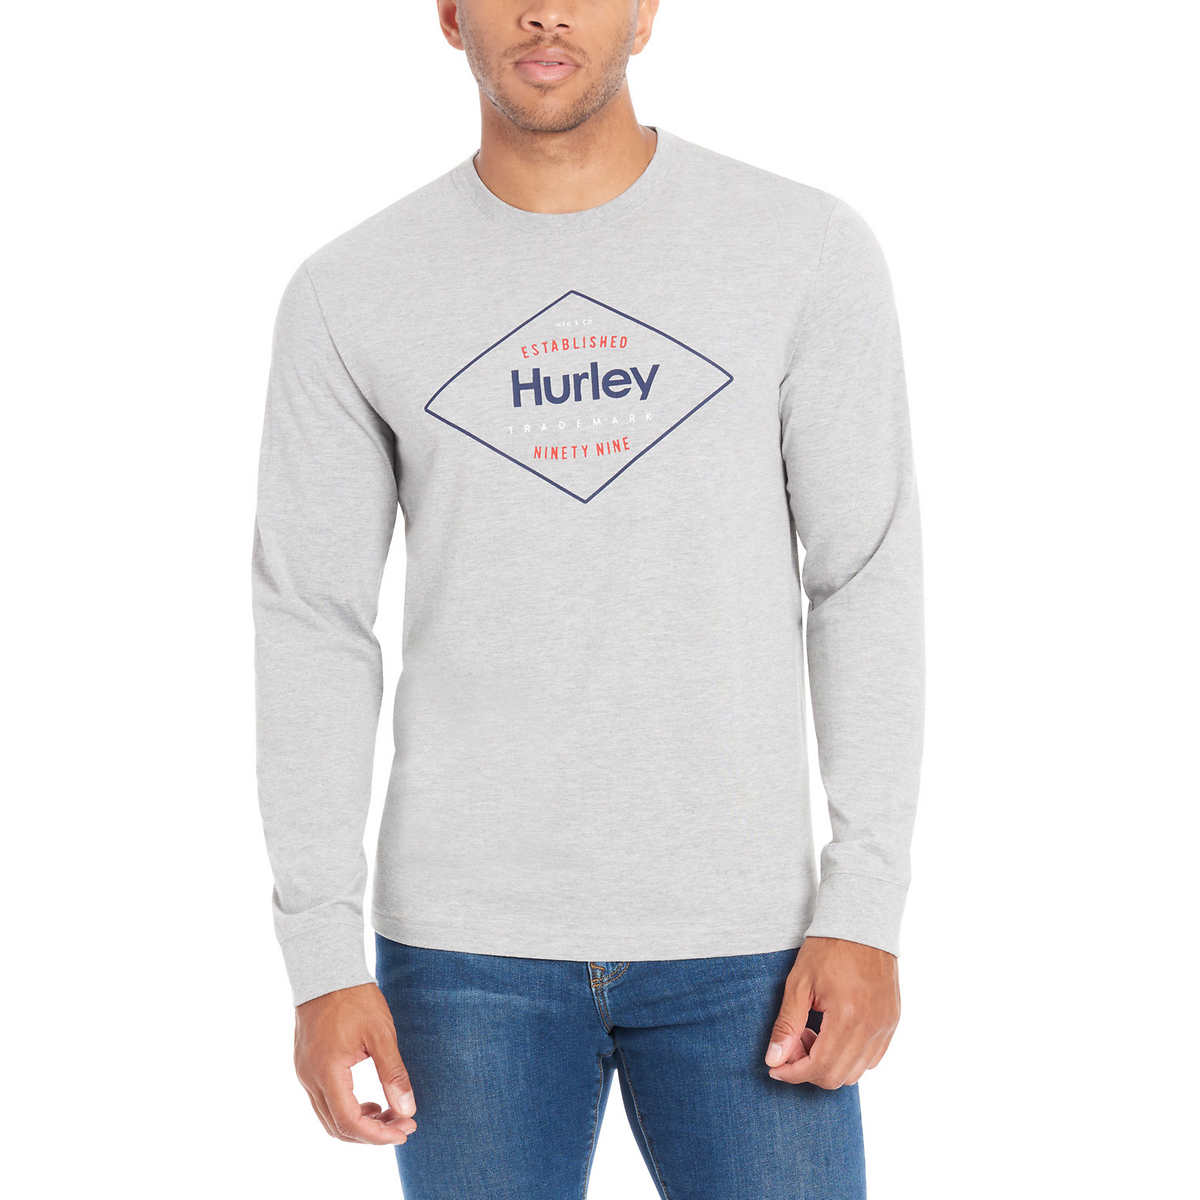 Hurley Men's Long Sleeve Graphic Tee